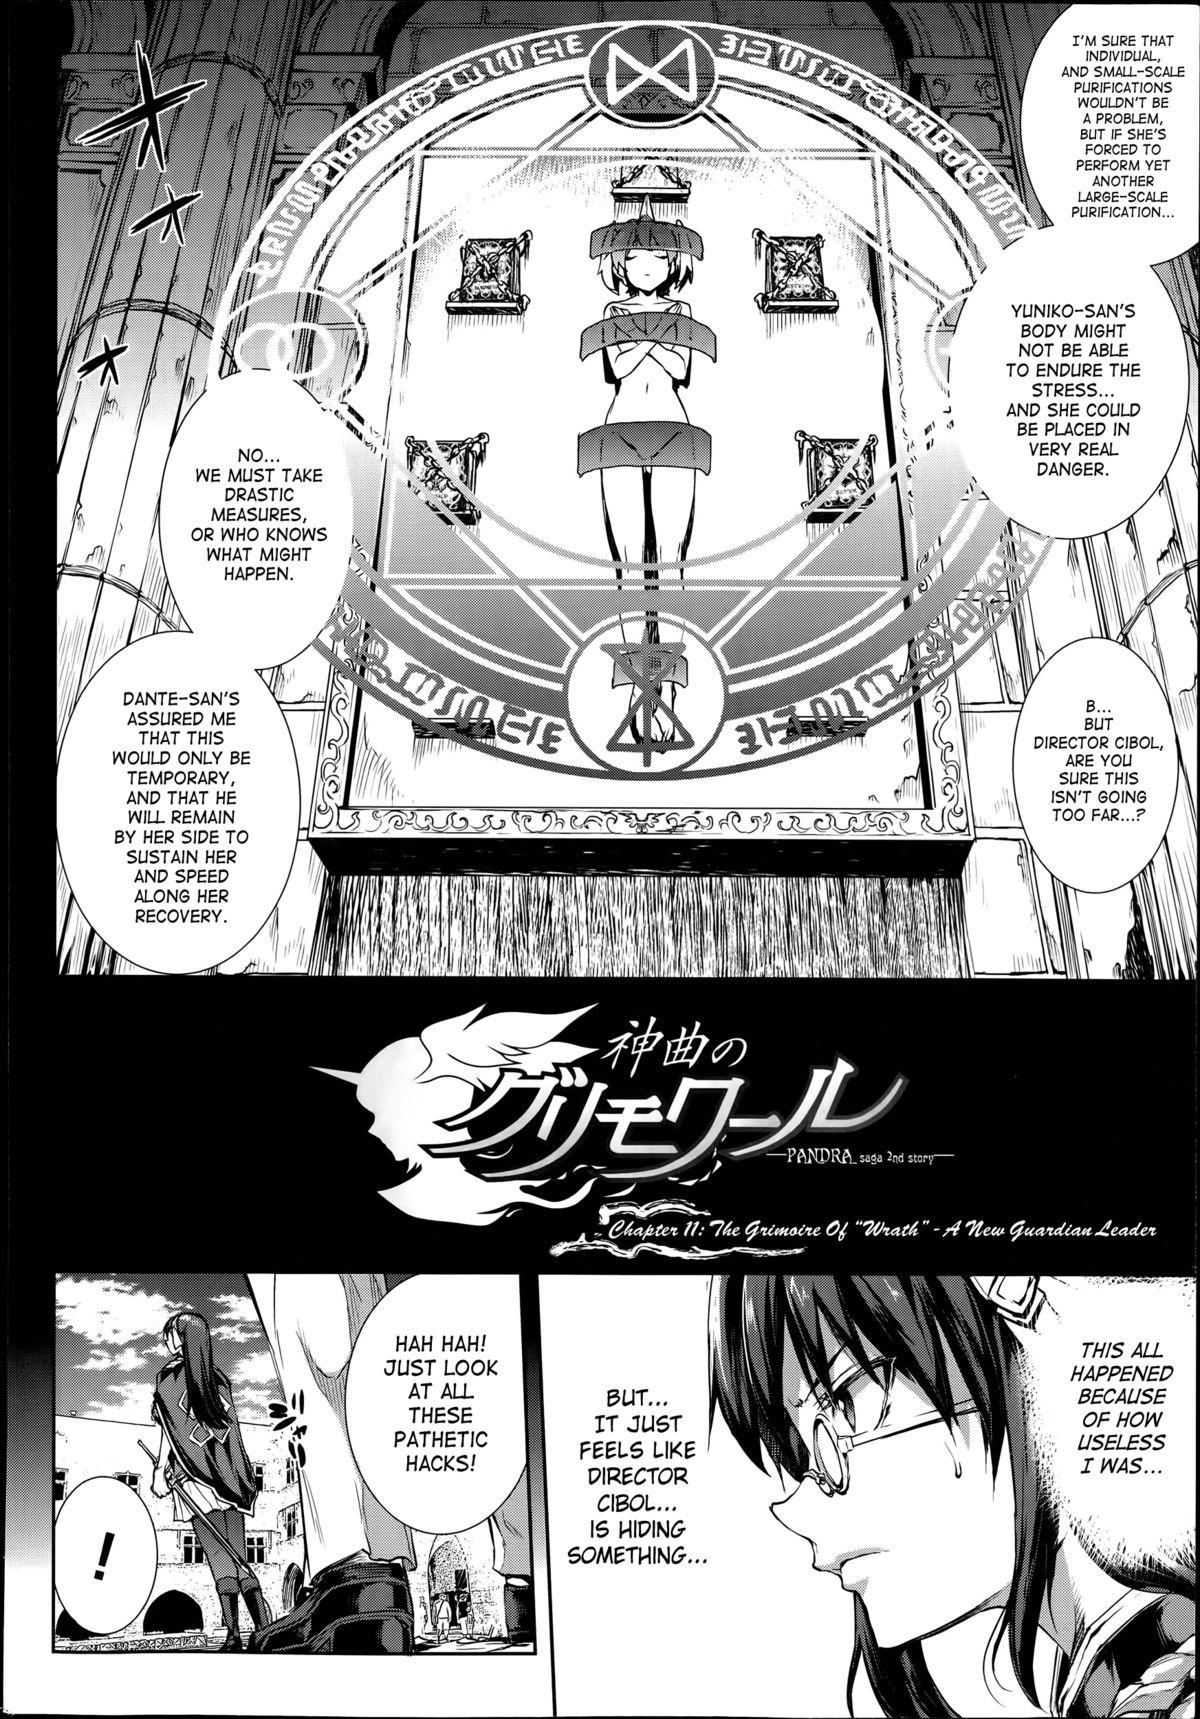 [Erect Sawaru] Shinkyoku no Grimoire -PANDRA saga 2nd story- Ch. 1-18 + Side Story x 3 [English] [SaHa] 332